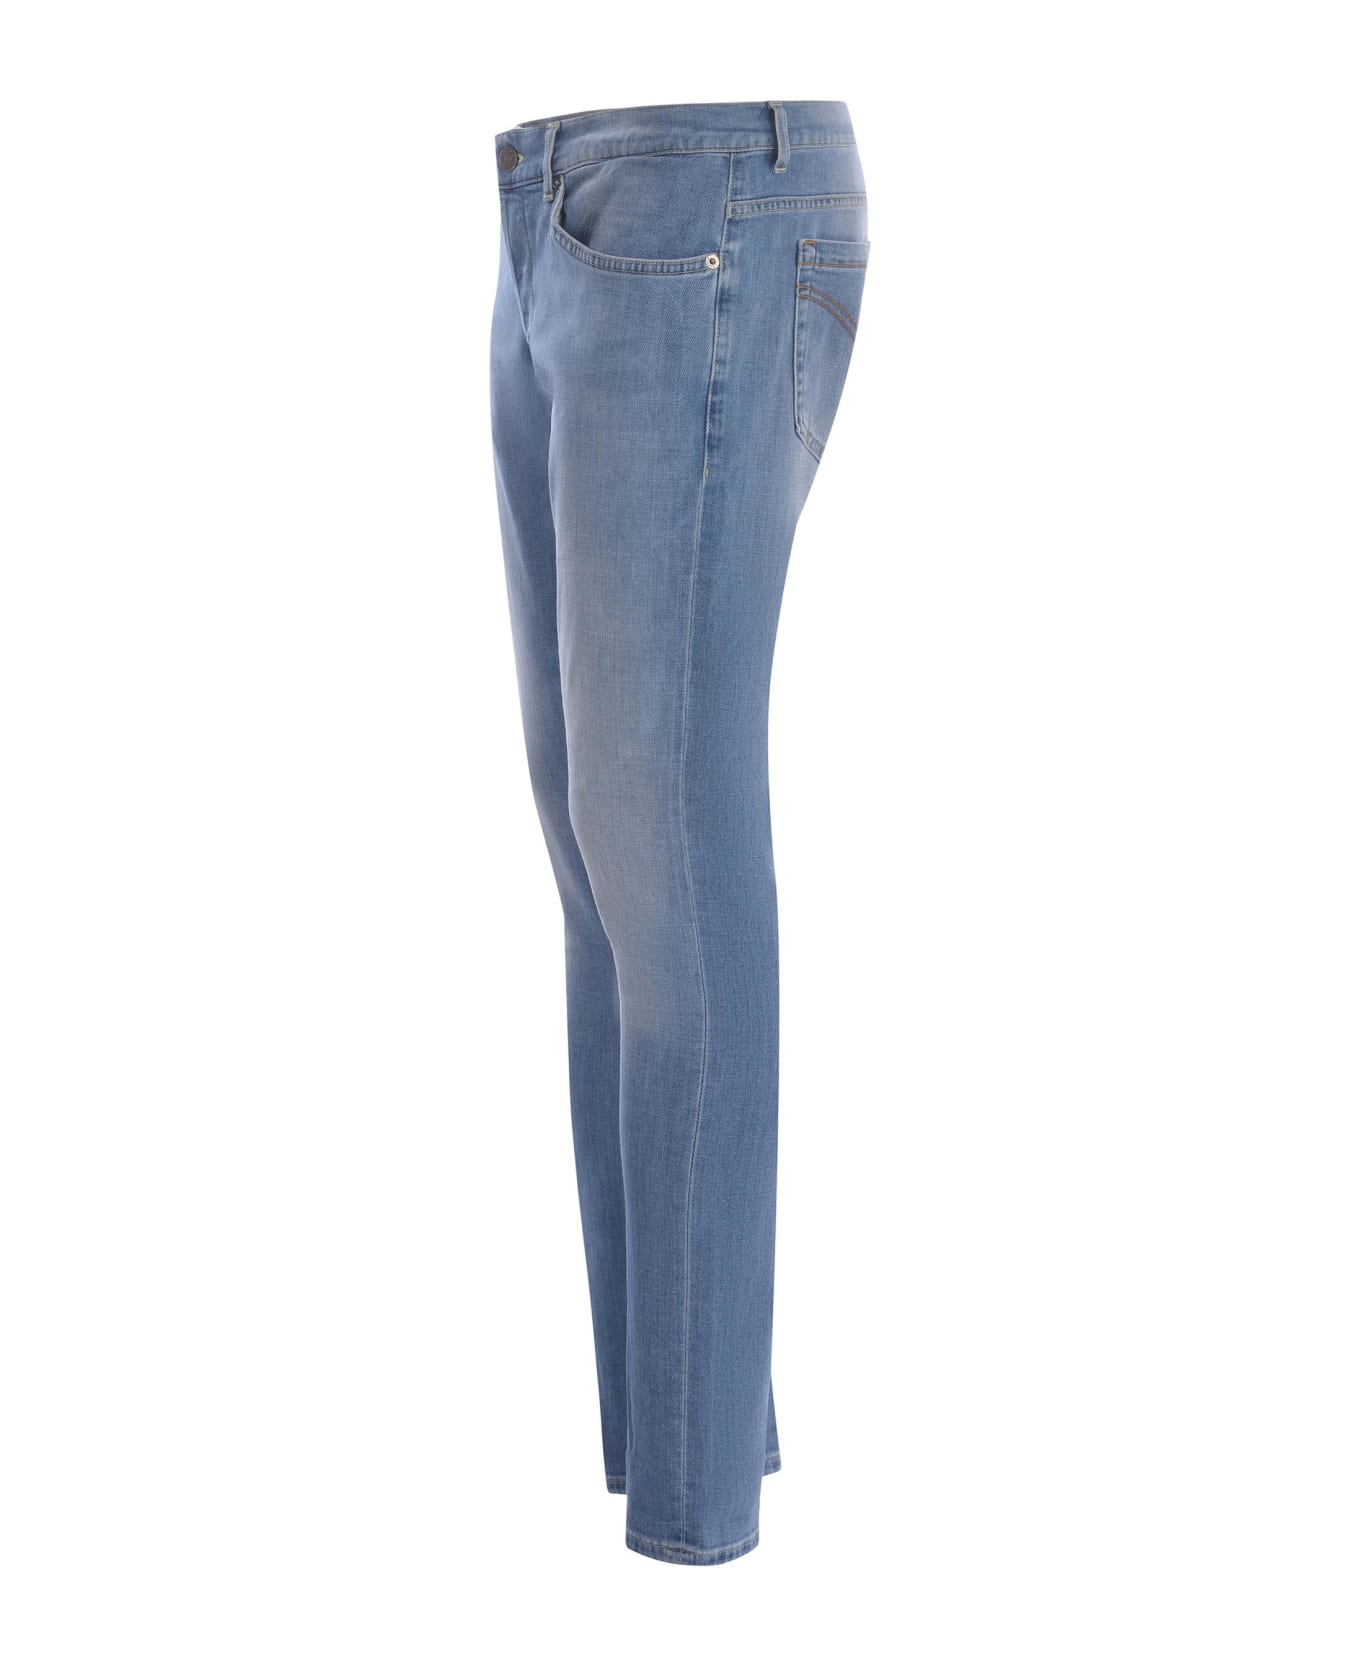 Dondup Jeans Dondup "george" Made Of Stretch Denim - Denim azzurro chiaro デニム